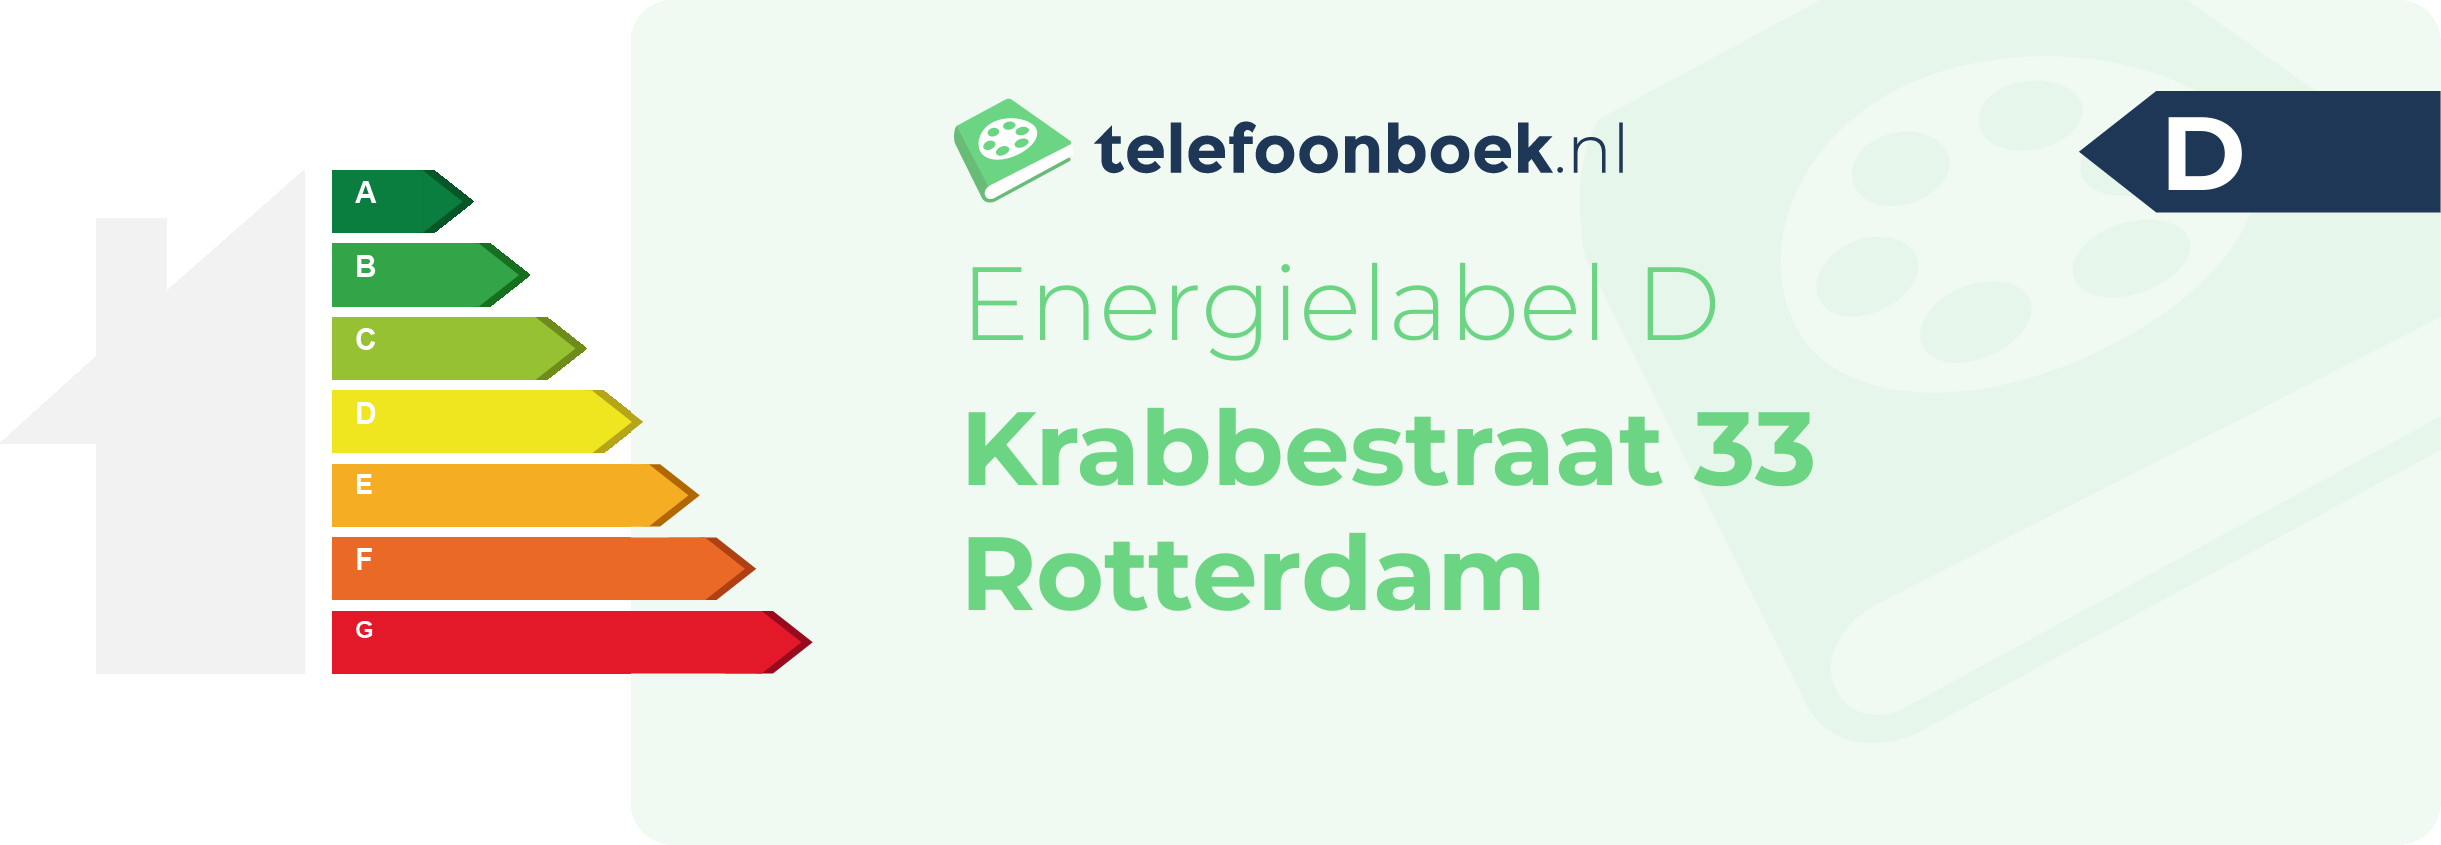 Energielabel Krabbestraat 33 Rotterdam